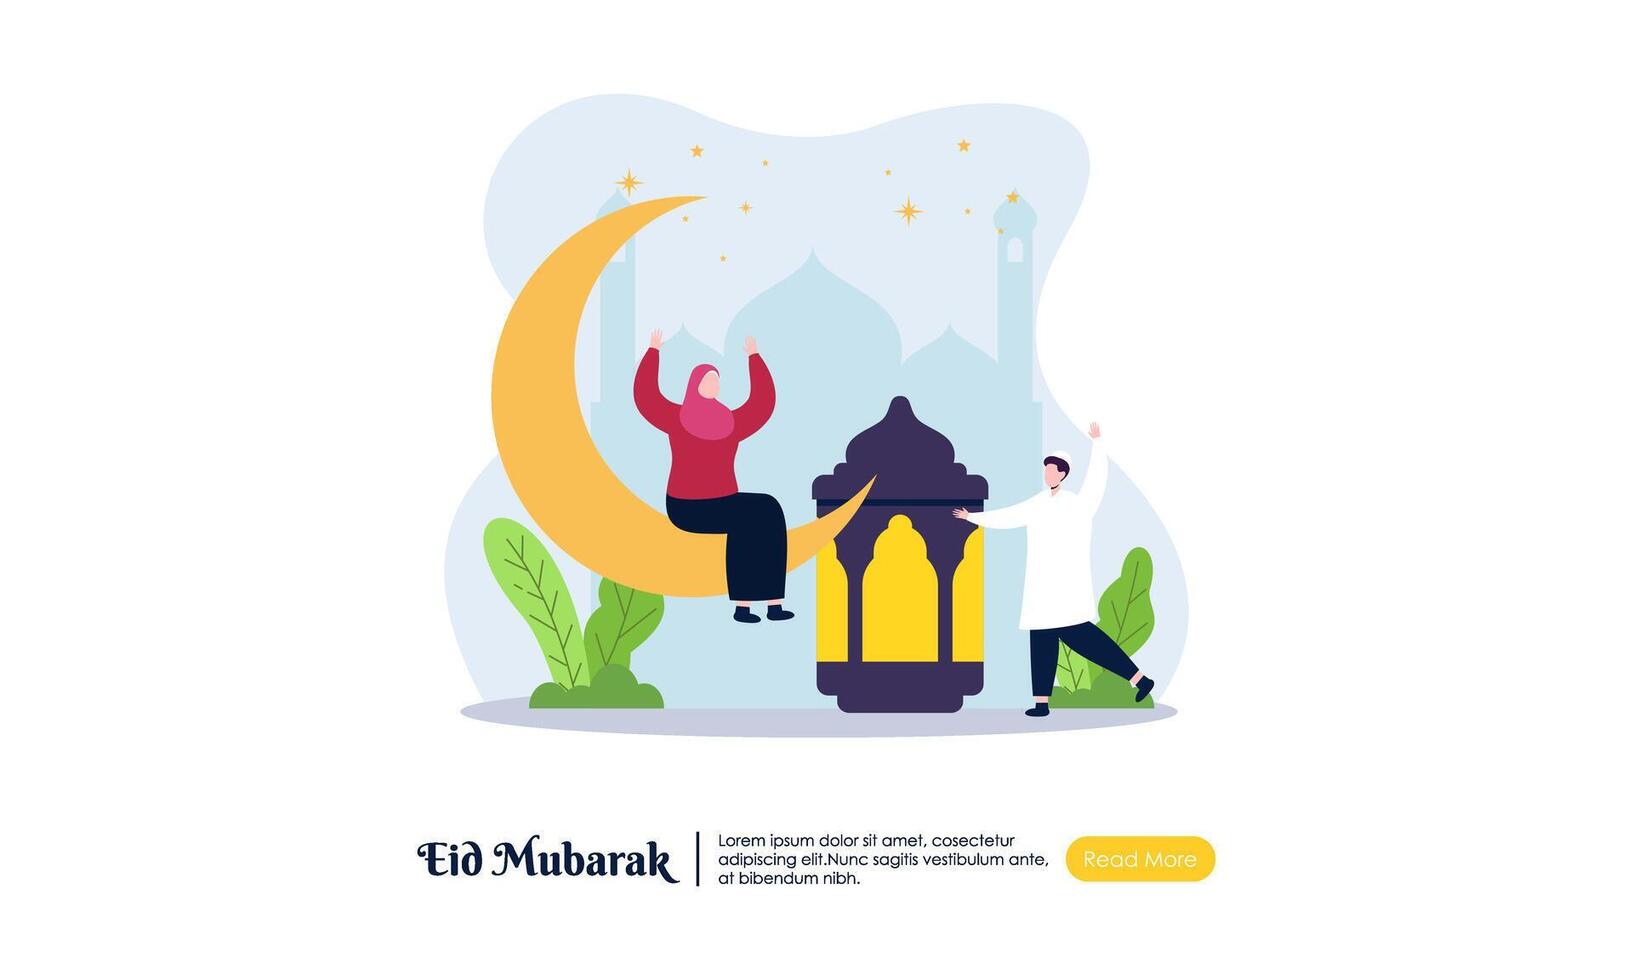 Happy Eid Mubarak or Ramadan Greeting with People Character Illustration. vector